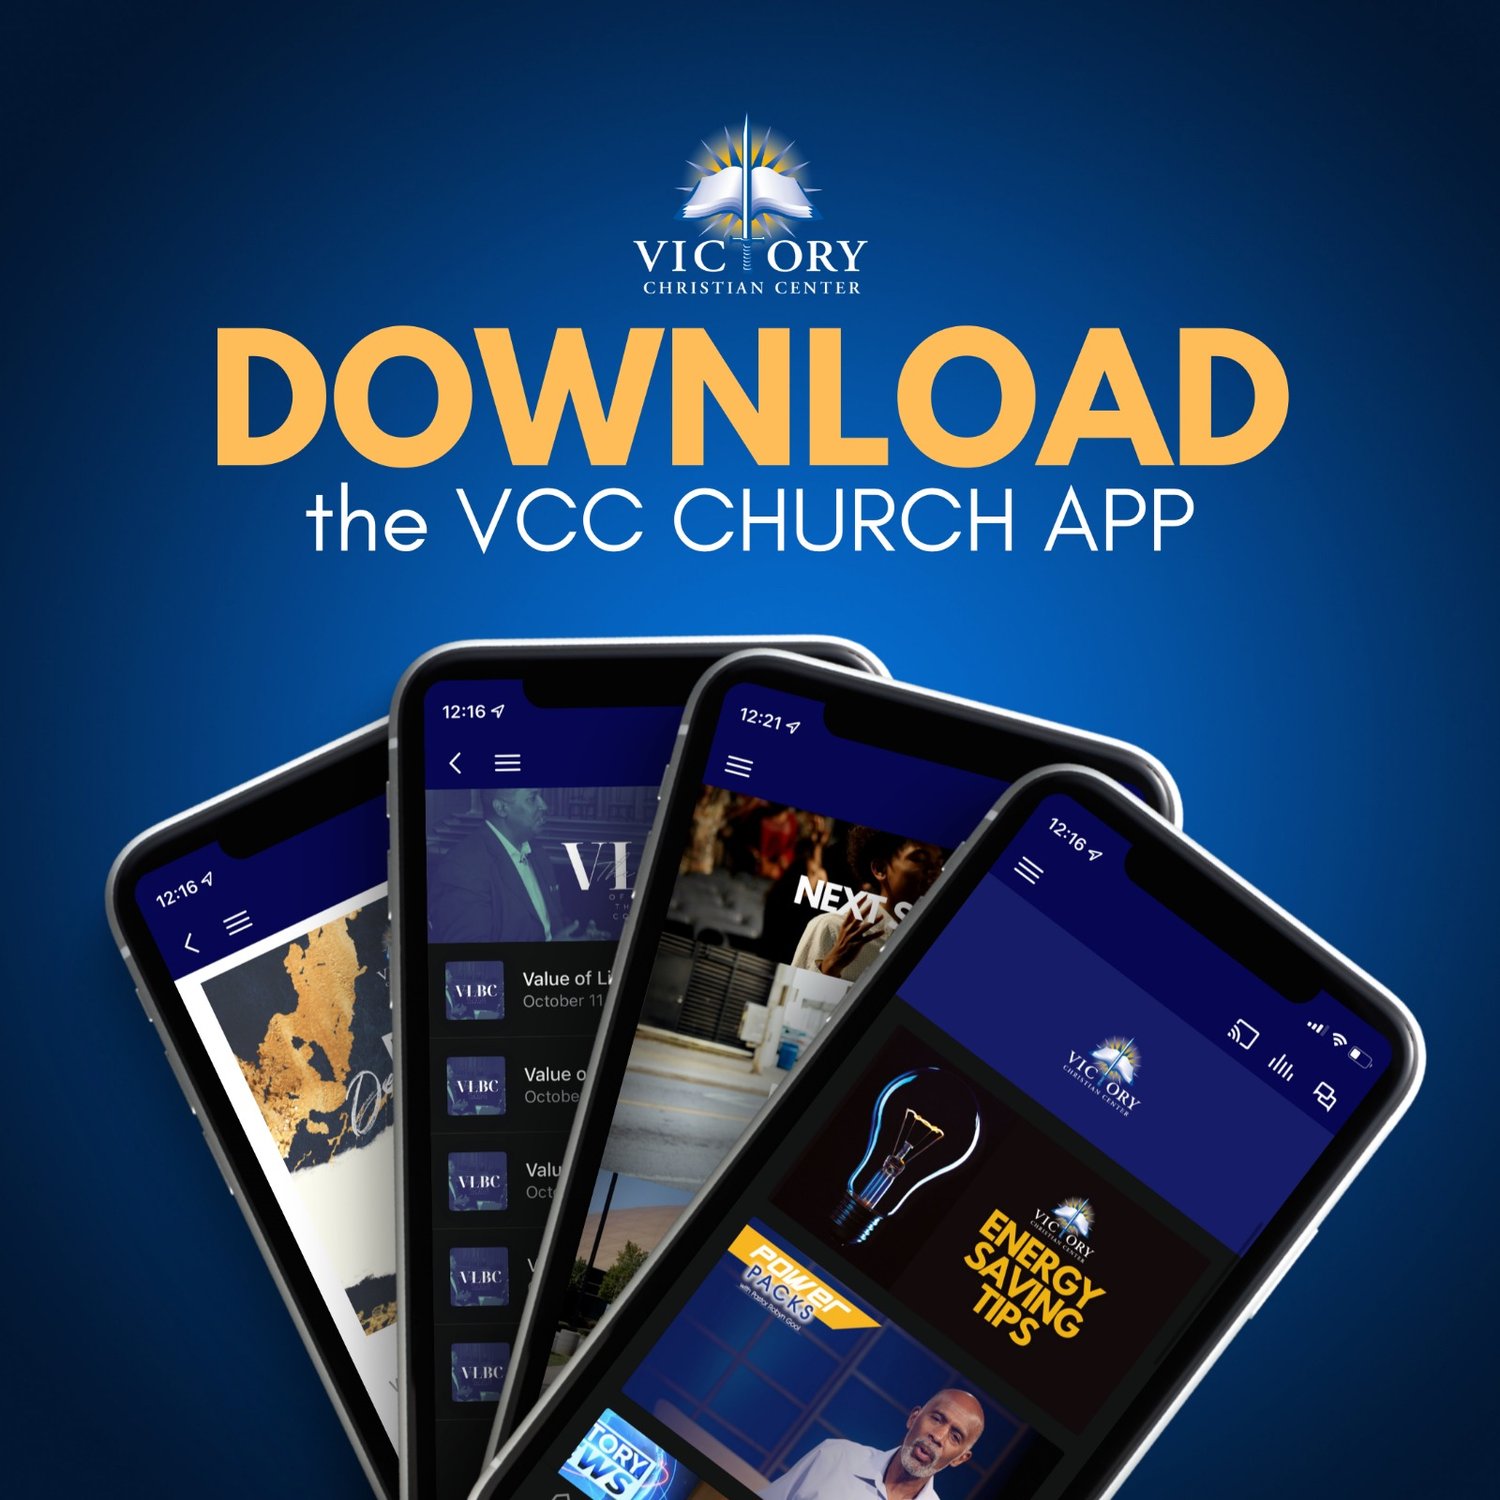 Church App Installation & Use